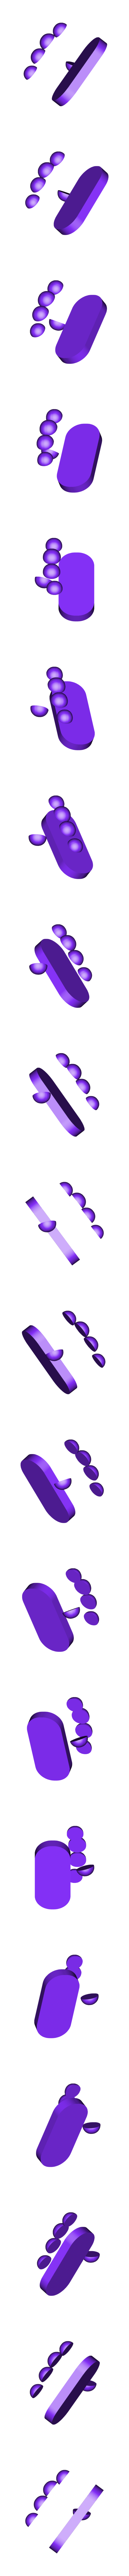 Right_Forearm_Purple.stl Download free STL file Buzz Lightyear - Multi Color Print • 3D printer object, ChaosCoreTech